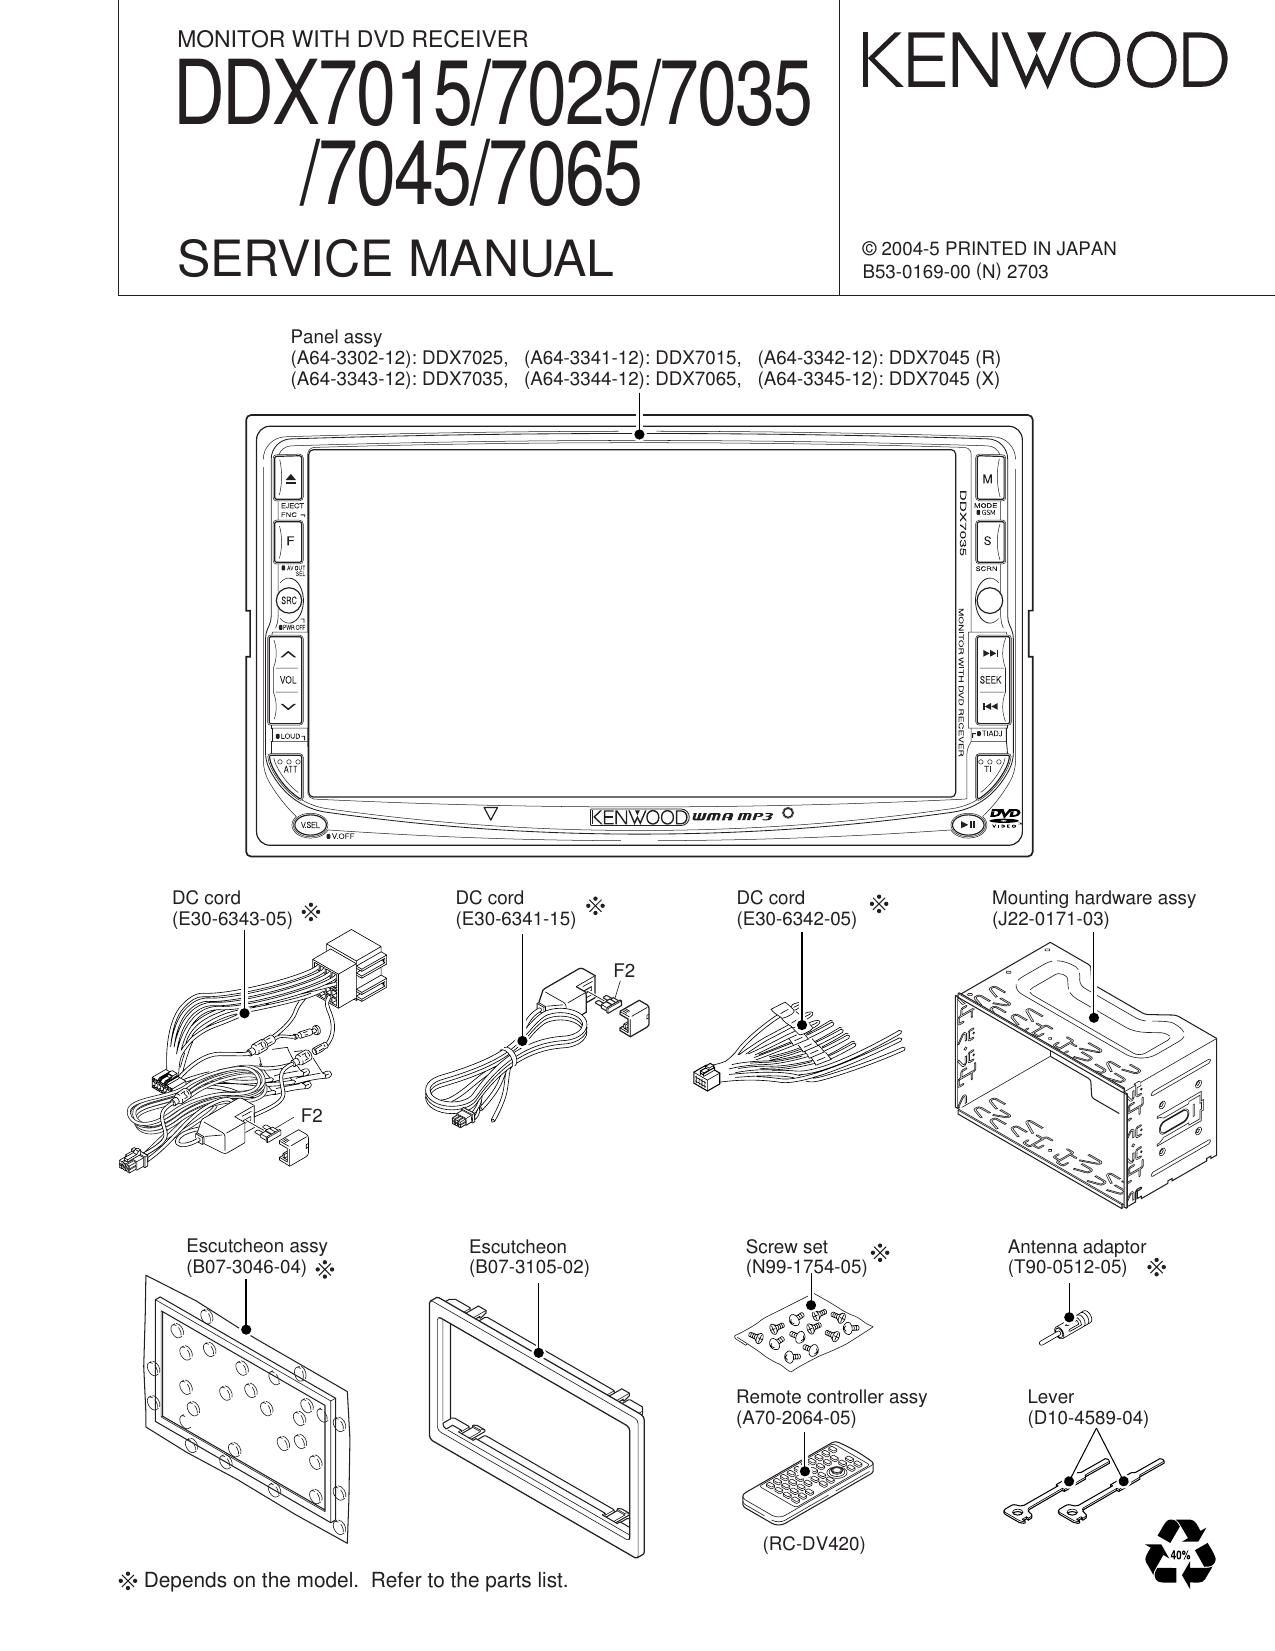 Kenwood DDX 7065 Service Manual